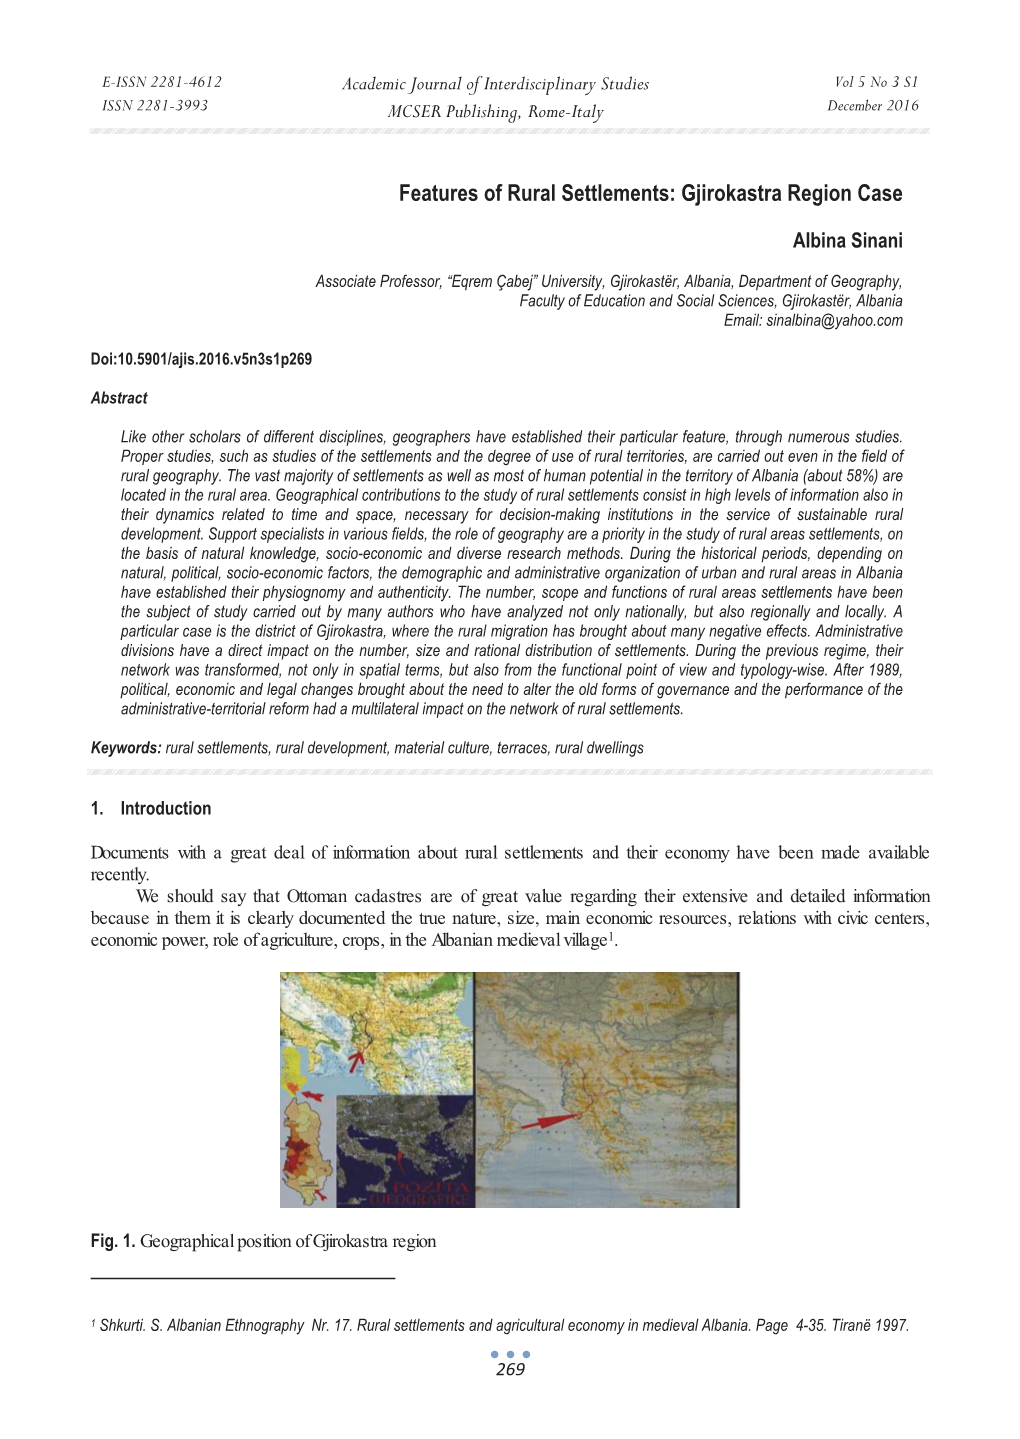 Features of Rural Settlements: Gjirokastra Region Case